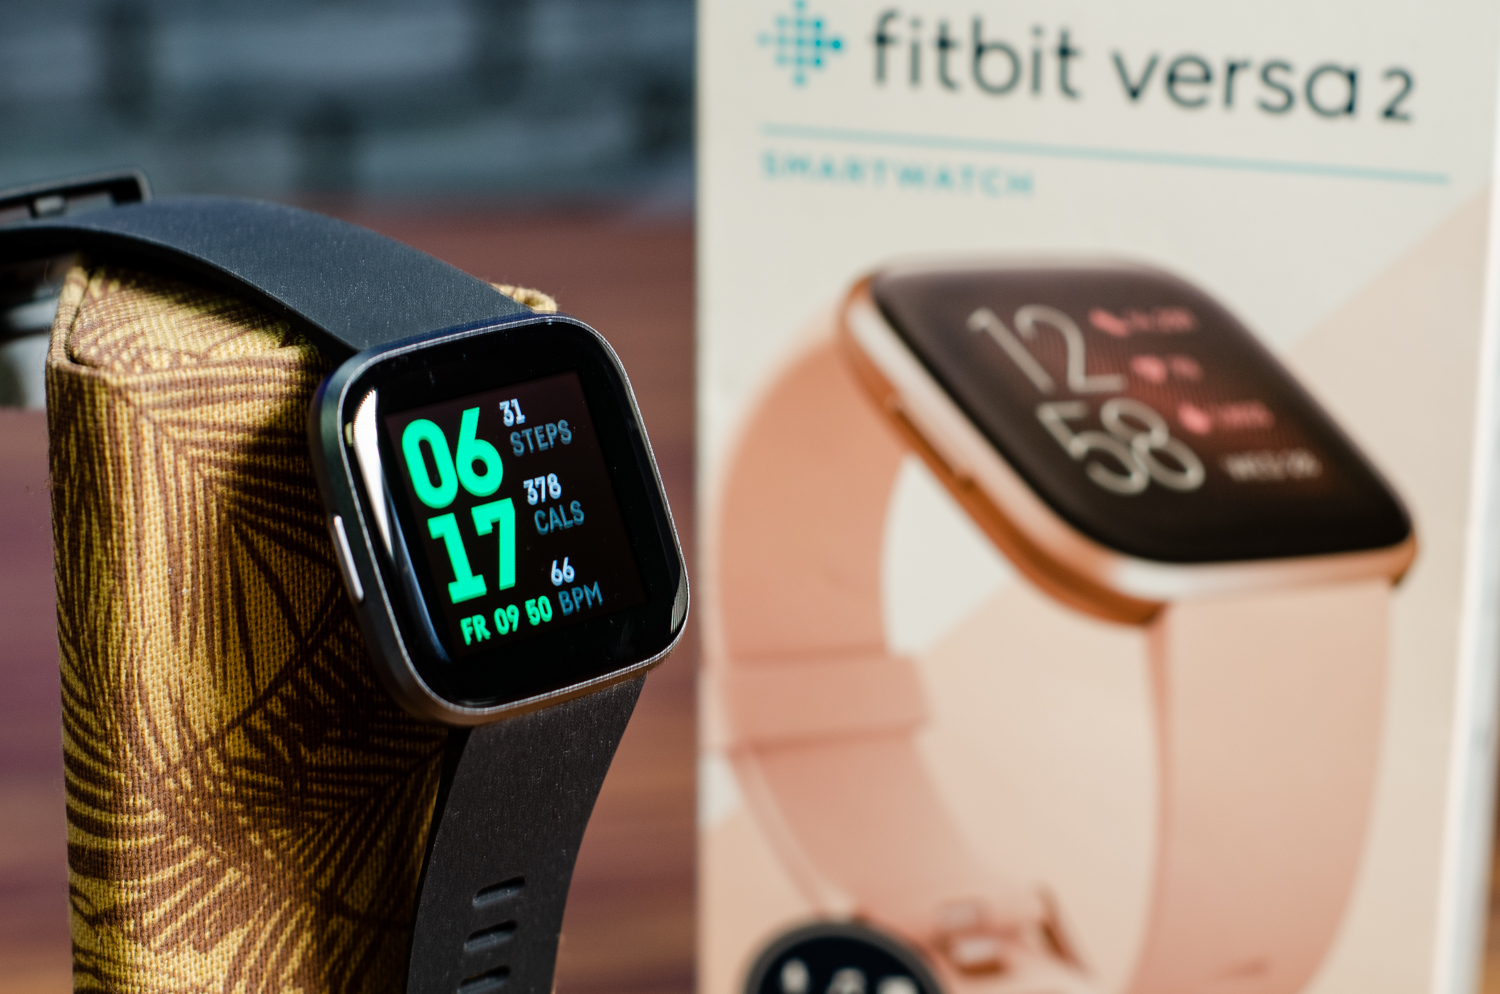 Fellow Playful tillykke Fitbit Versa 2 vs. Fitbit Versa | Digital Trends